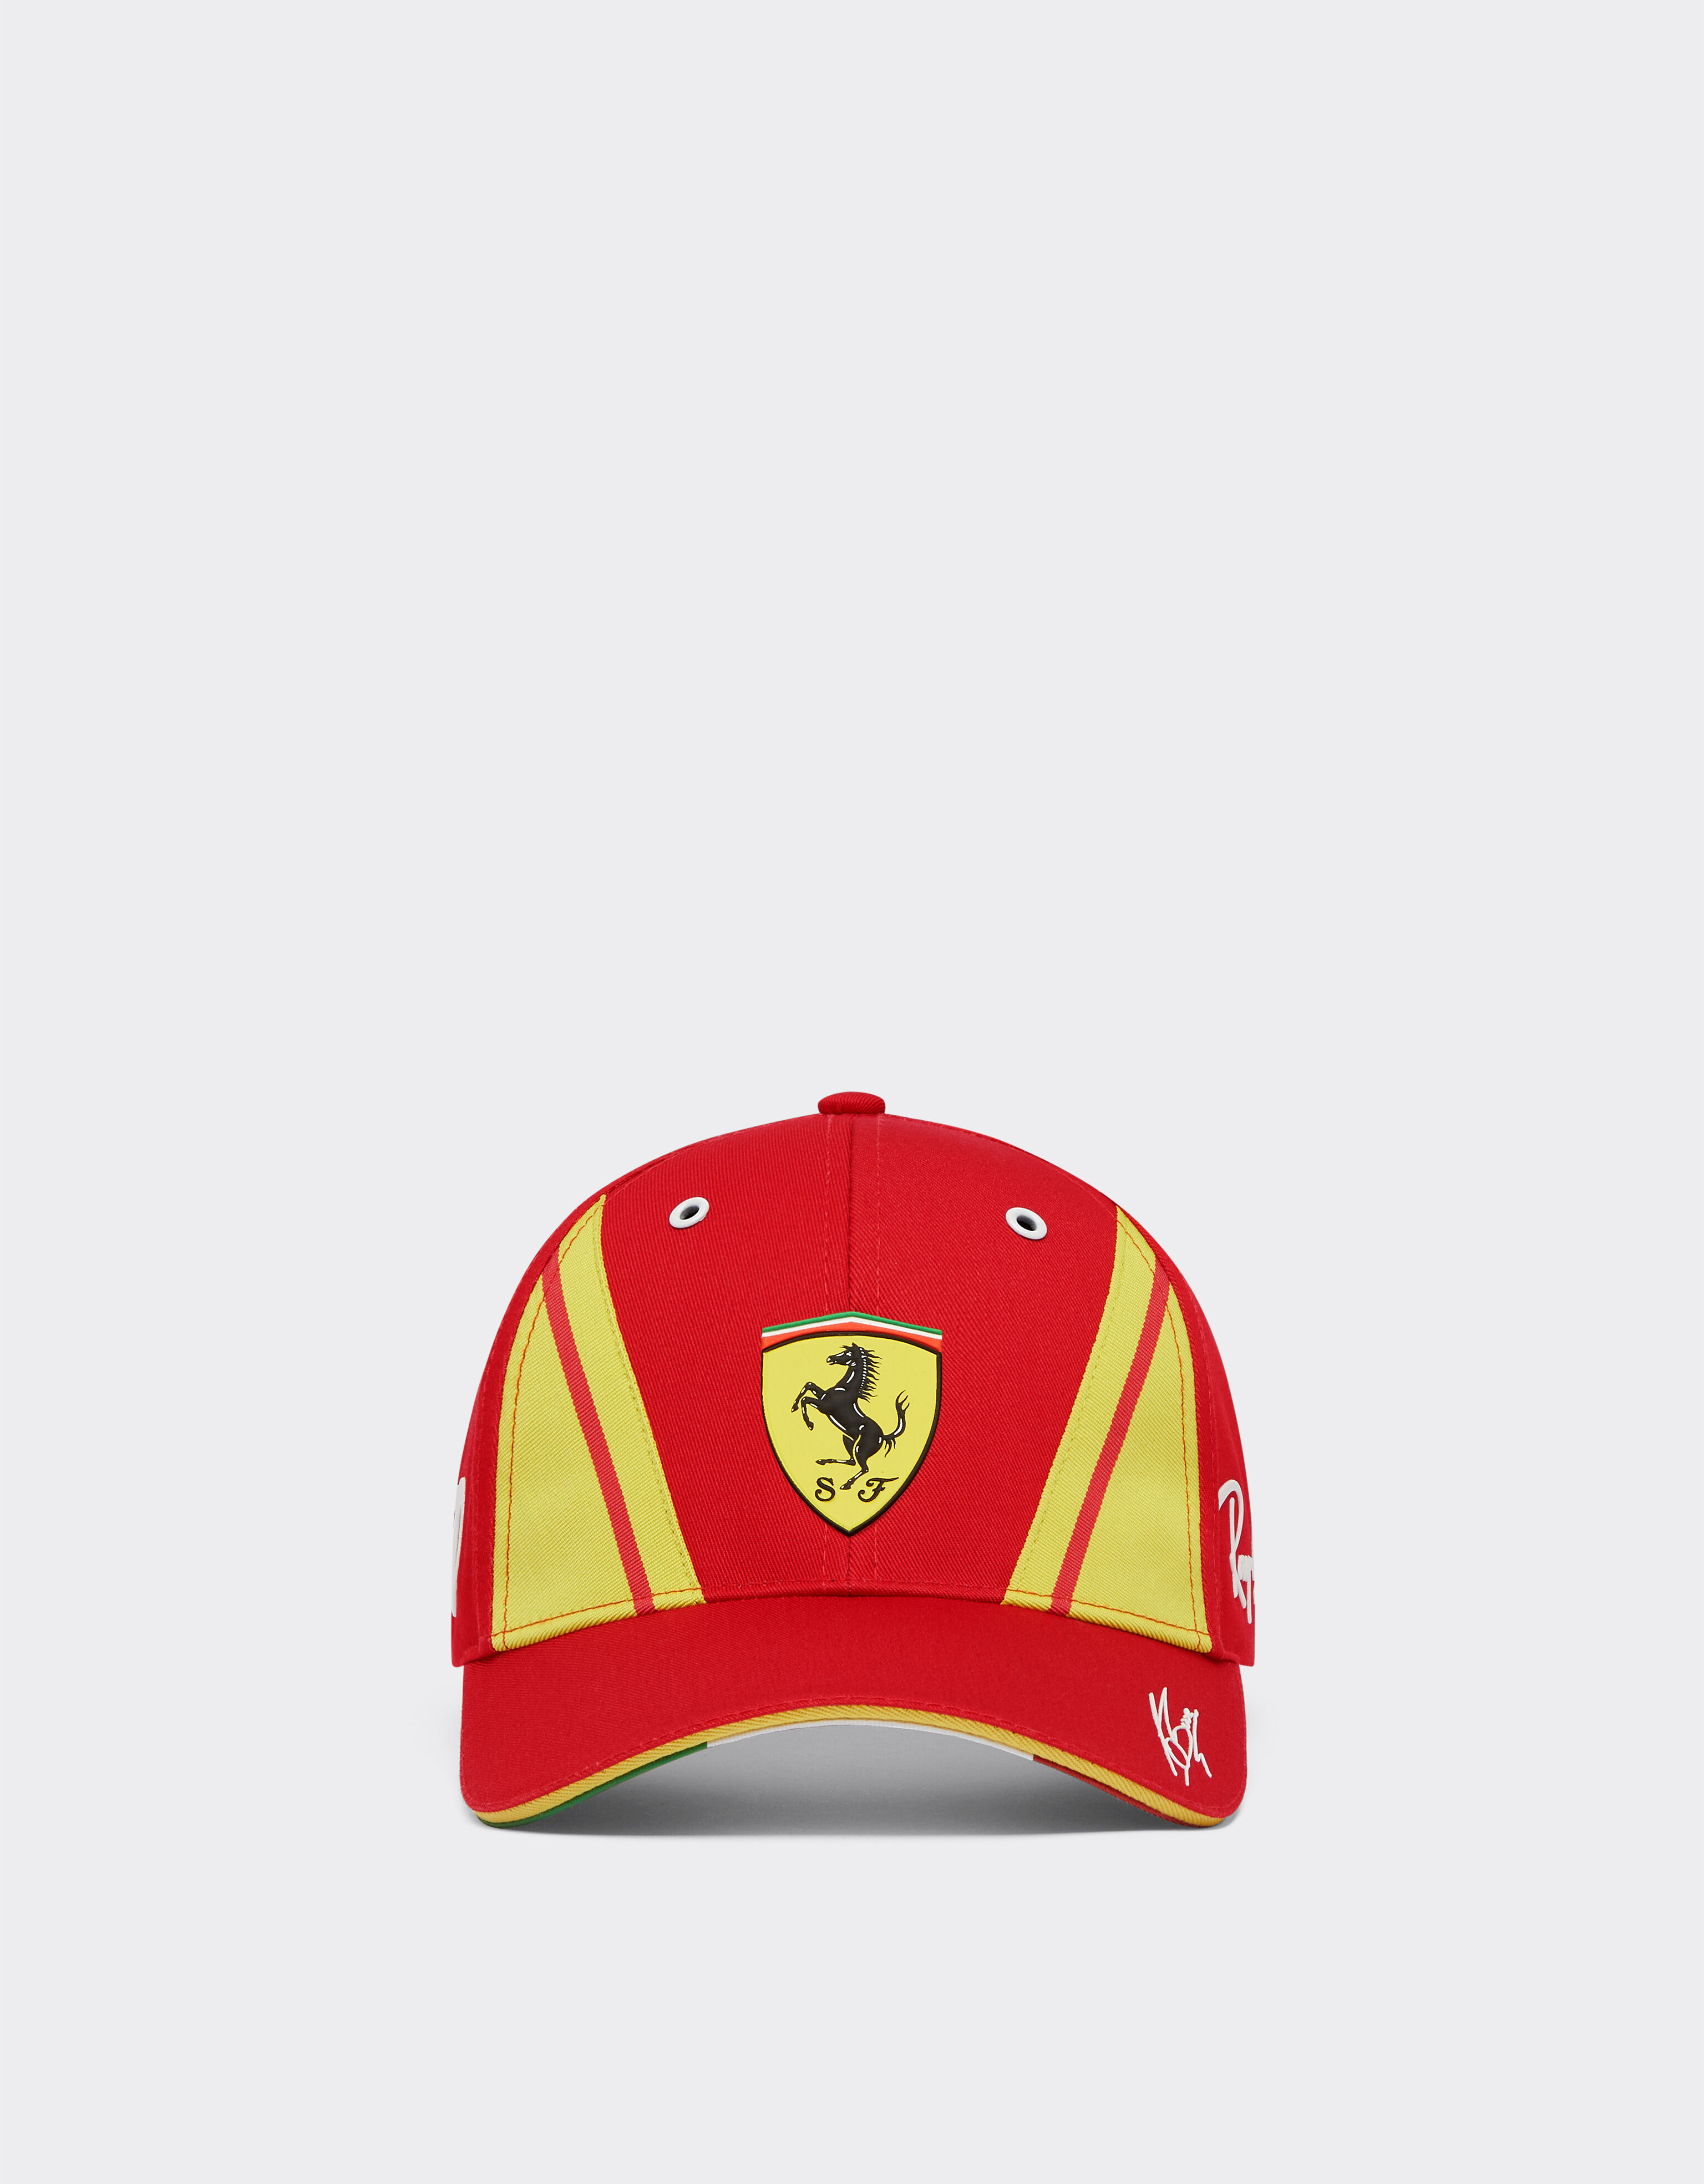 ${brand} Fuoco Ferrari Hypercar Baseballcap - Limited Edition ${colorDescription} ${masterID}